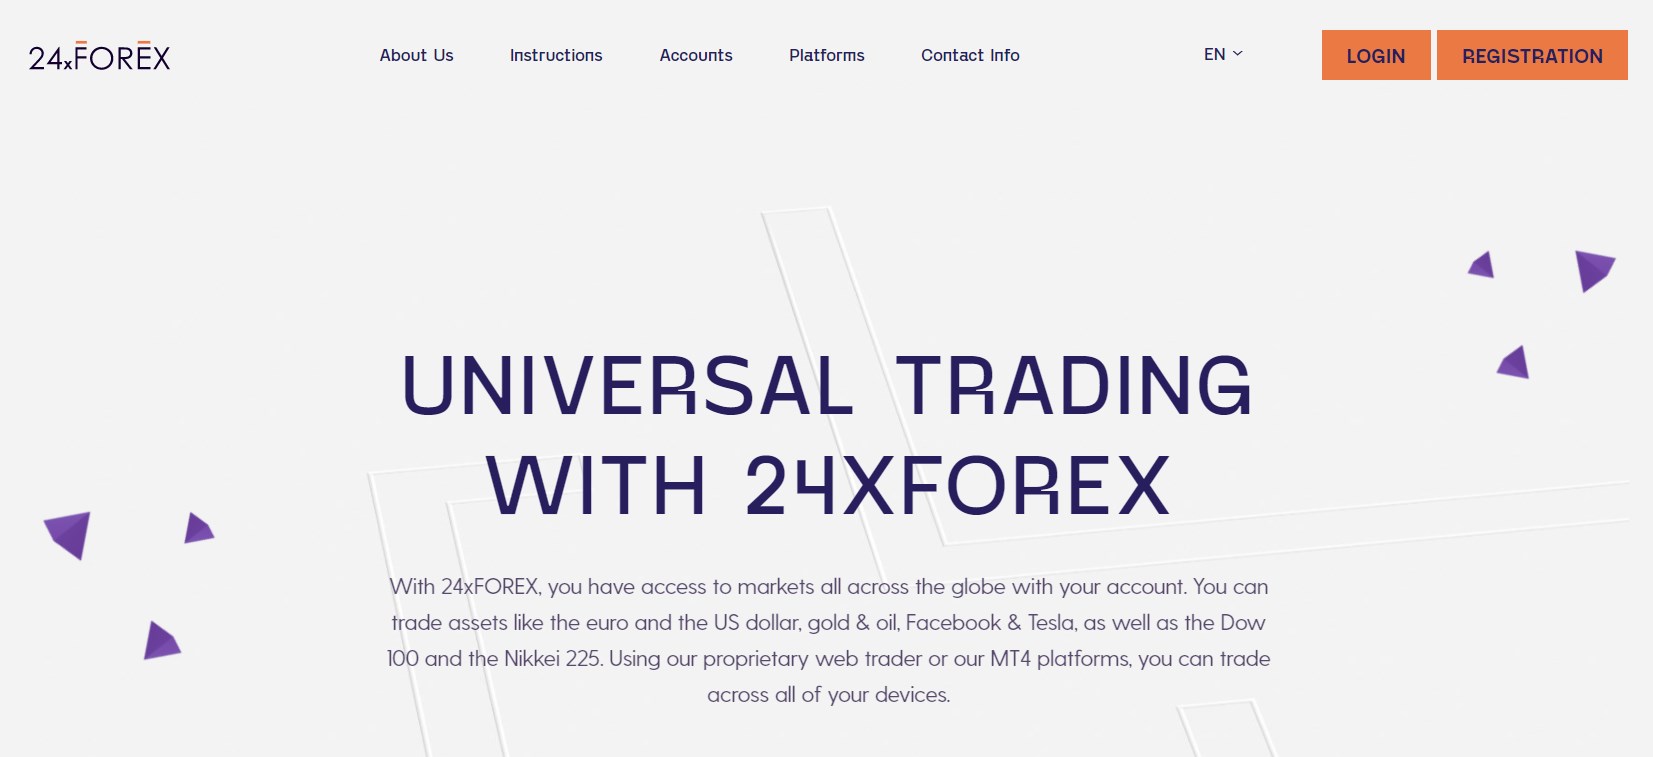 Xforex web trader fda forex bank sweden exchange rate